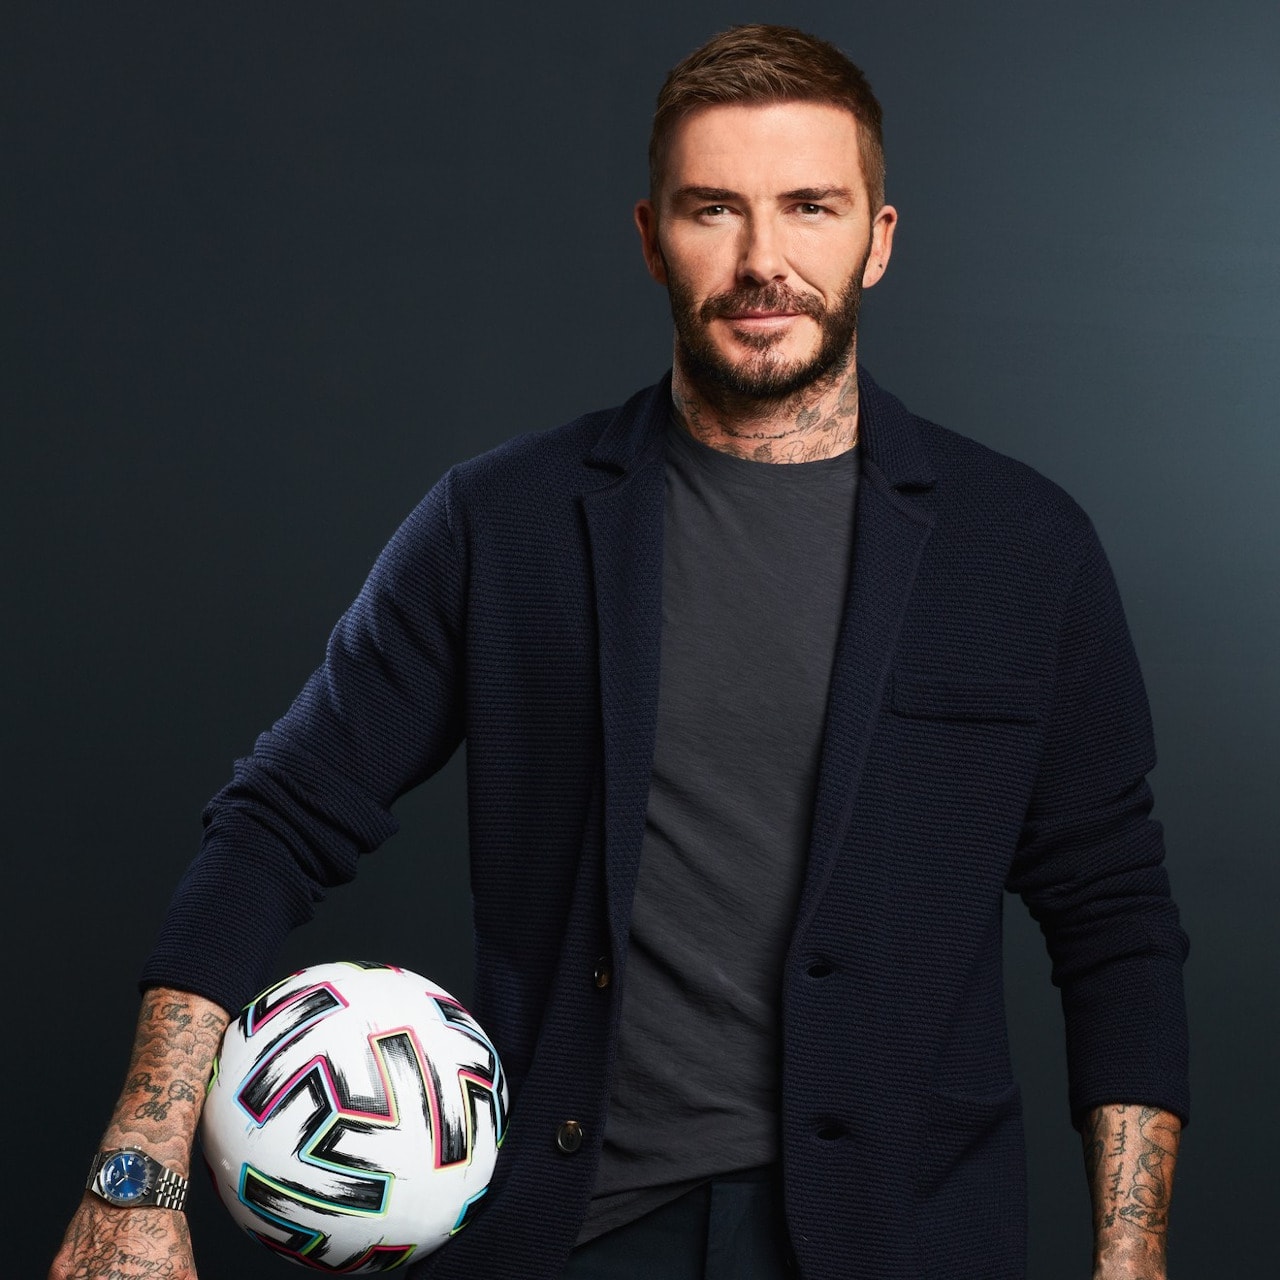 David Beckham Tudor Watches